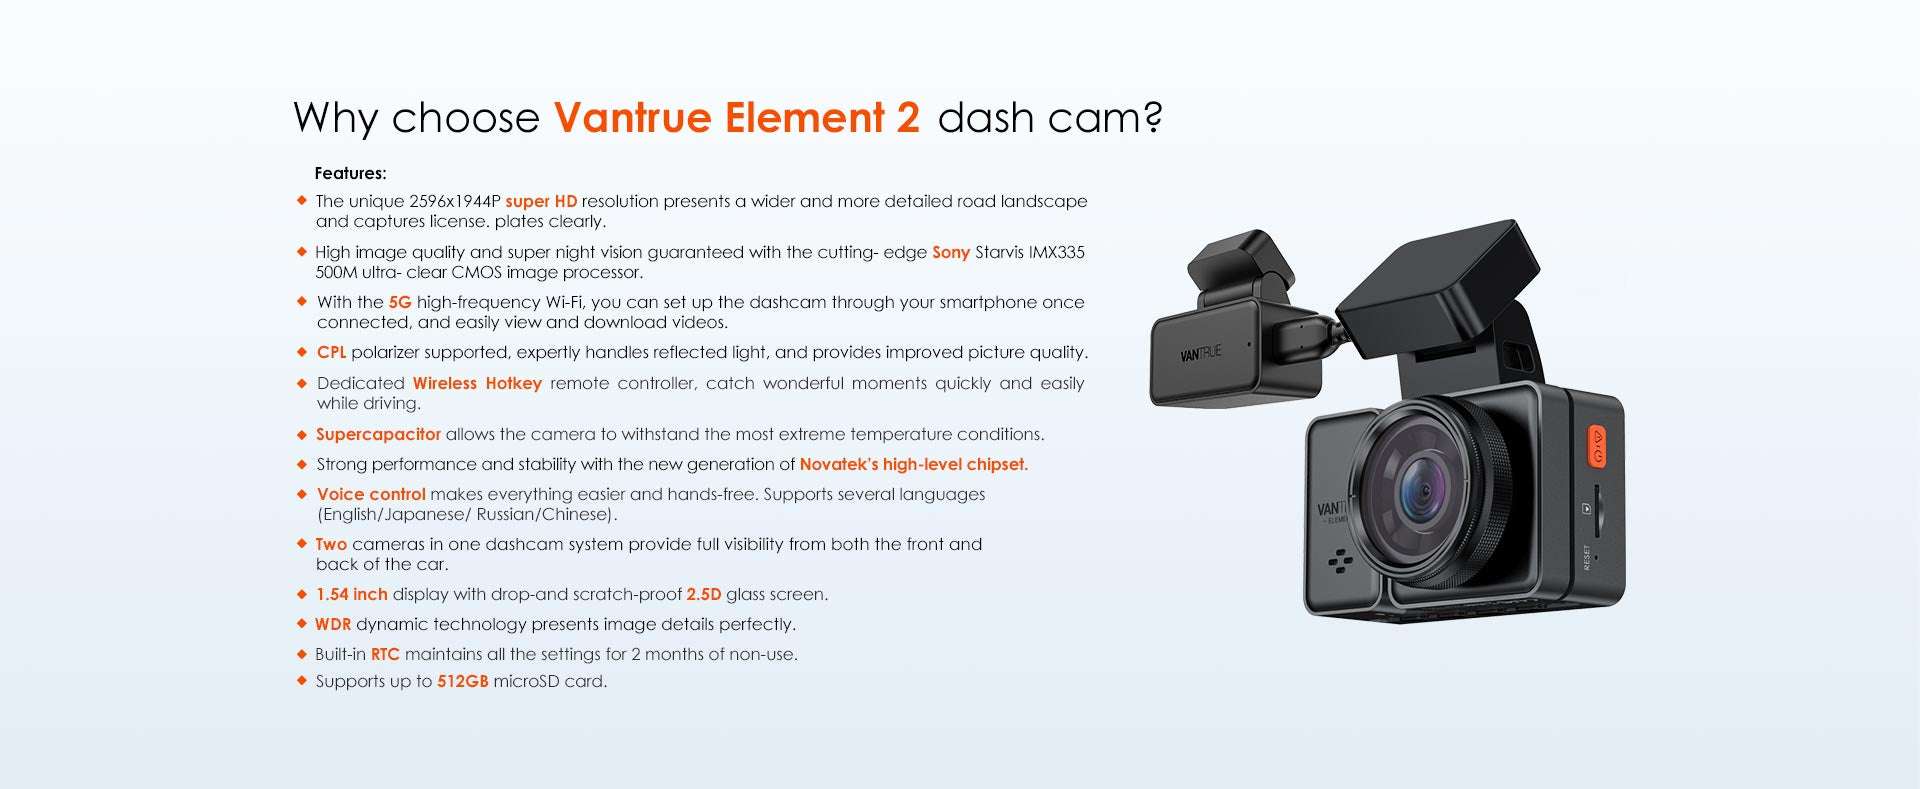 Vantrue Element 2 dash cam review